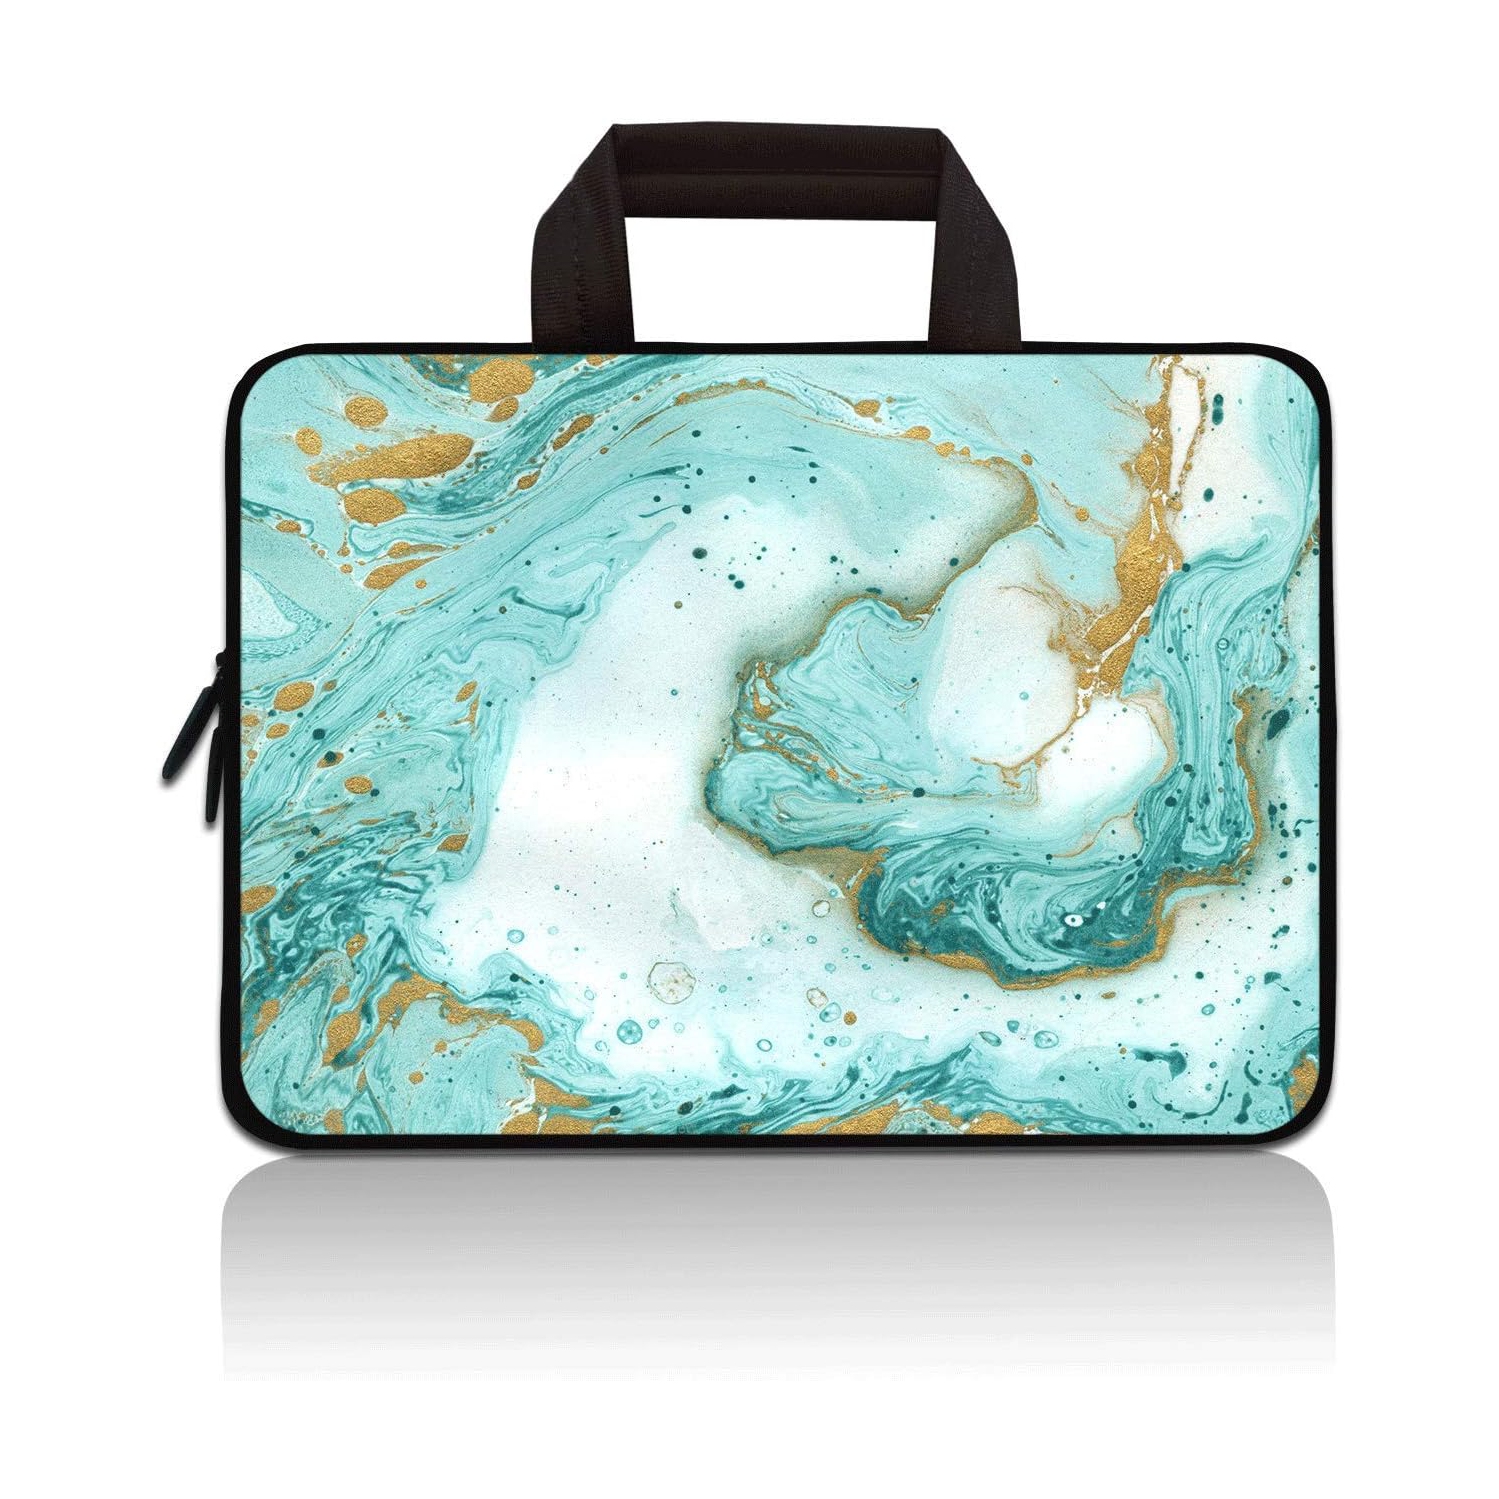 11" 11.6" 12" 12.1" 12.5" inch Laptop Carrying Bag Chromebook Case Notebook Ultrabook Bag Tablet Cover Neoprene Sleeve